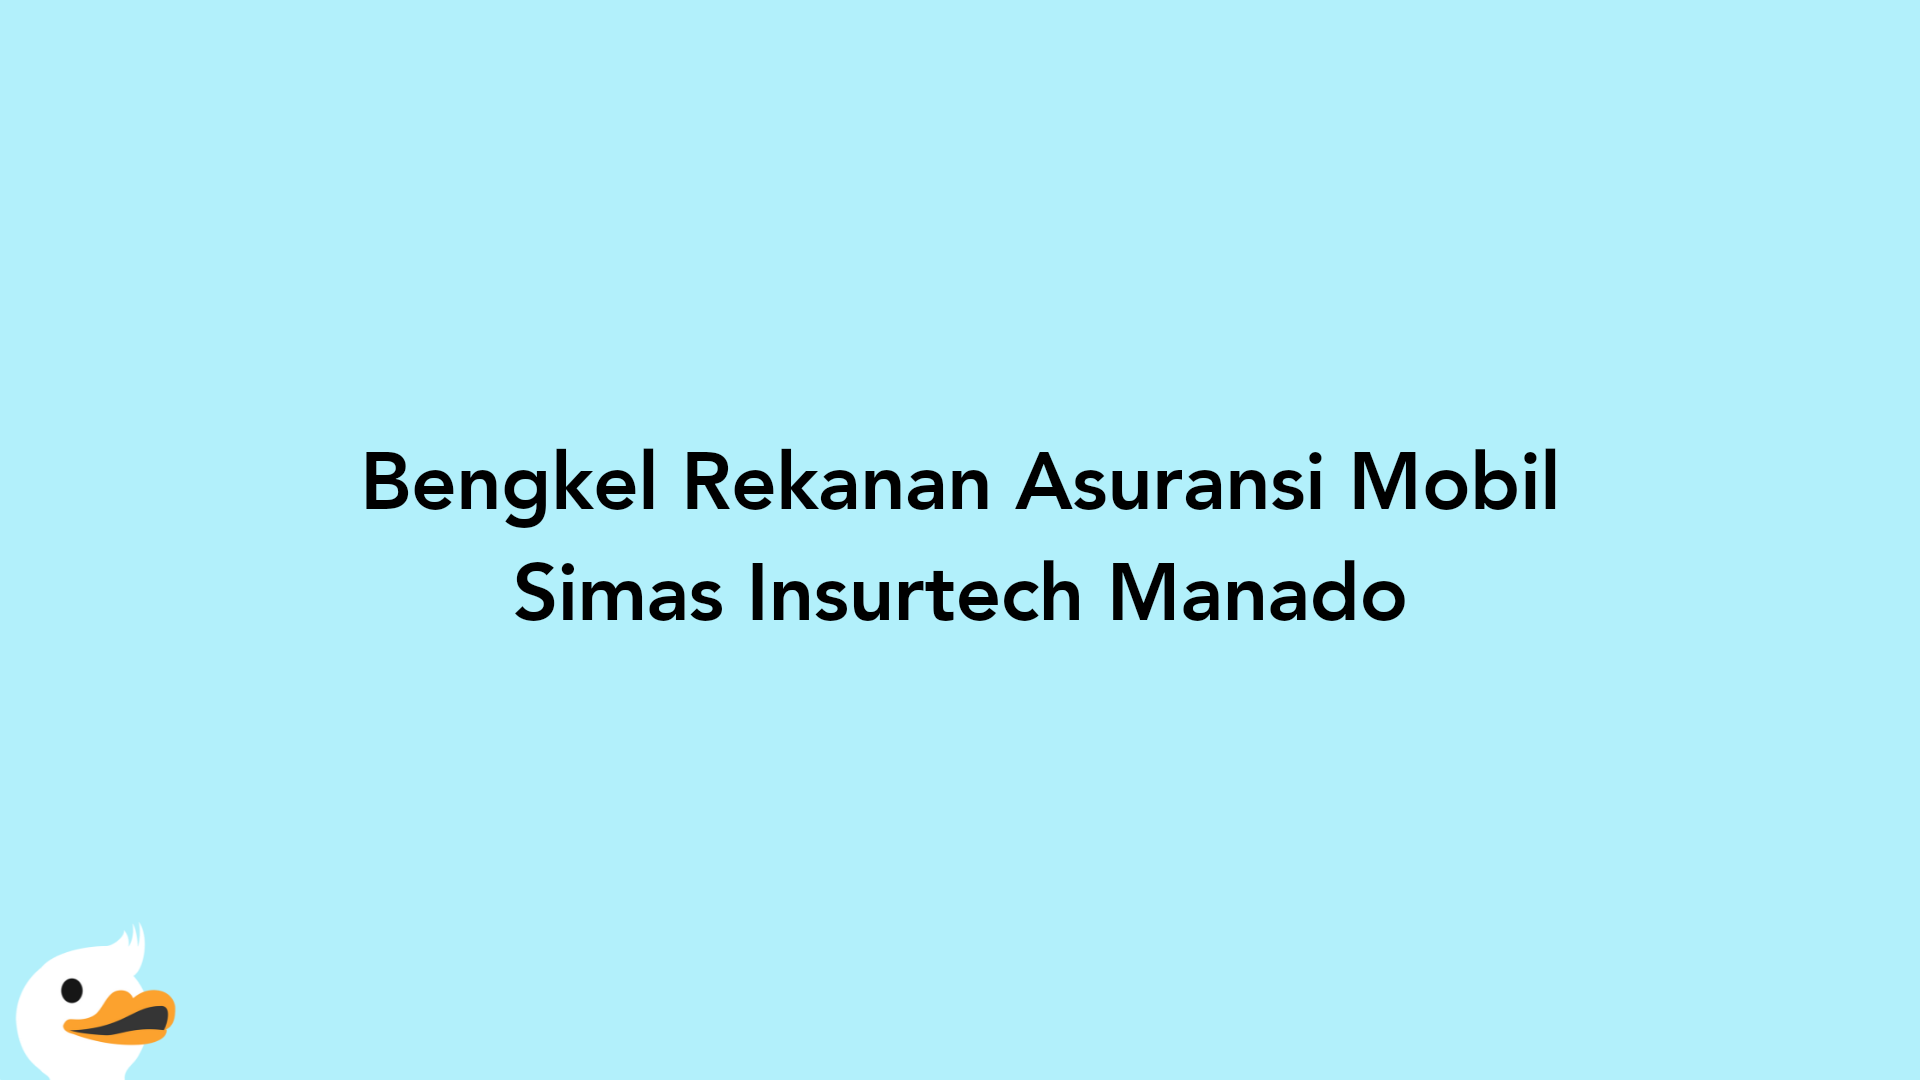 Bengkel Rekanan Asuransi Mobil Simas Insurtech Manado